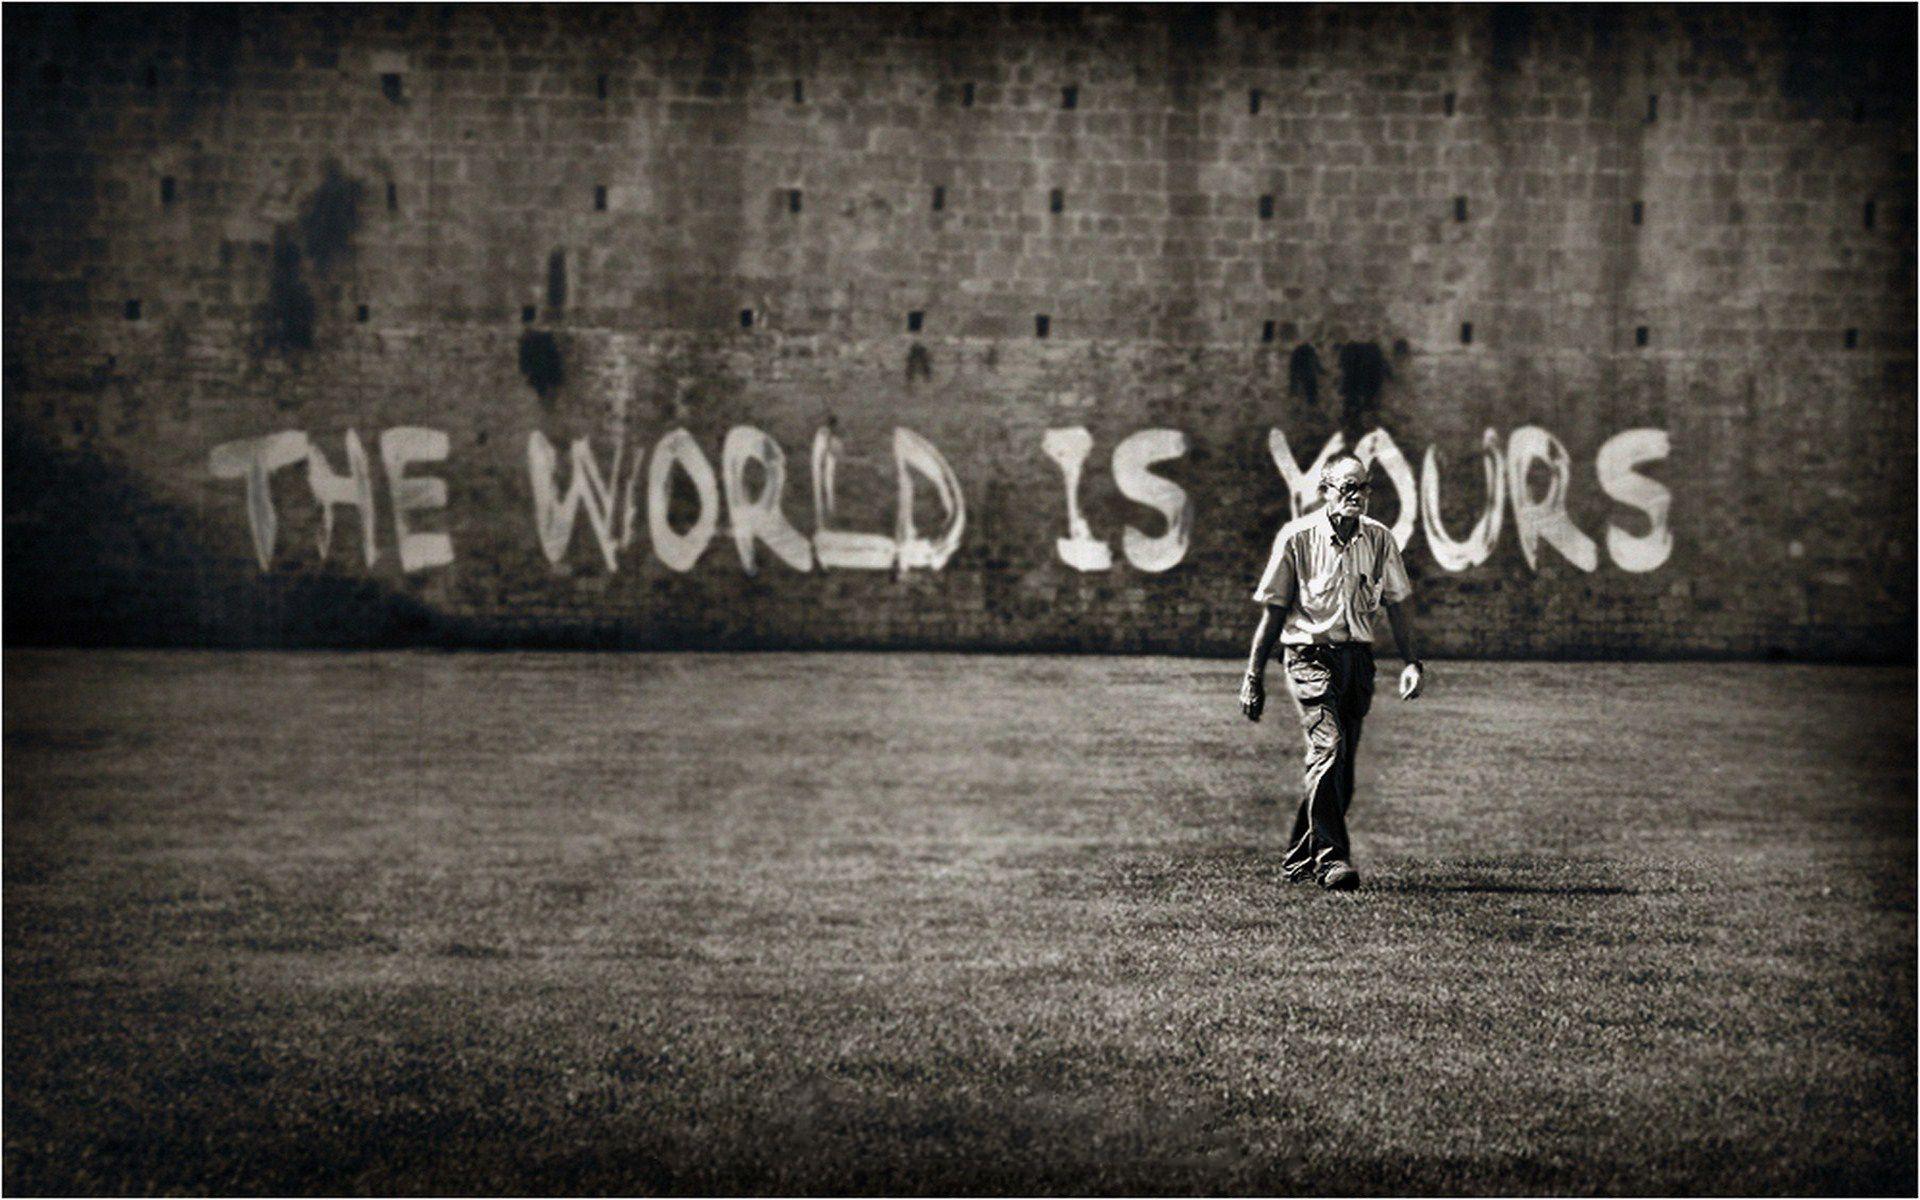 The world is waiting. Надписи на стенах. Обои с надписями для стен. Граффити на стене. The World is yours надпись.